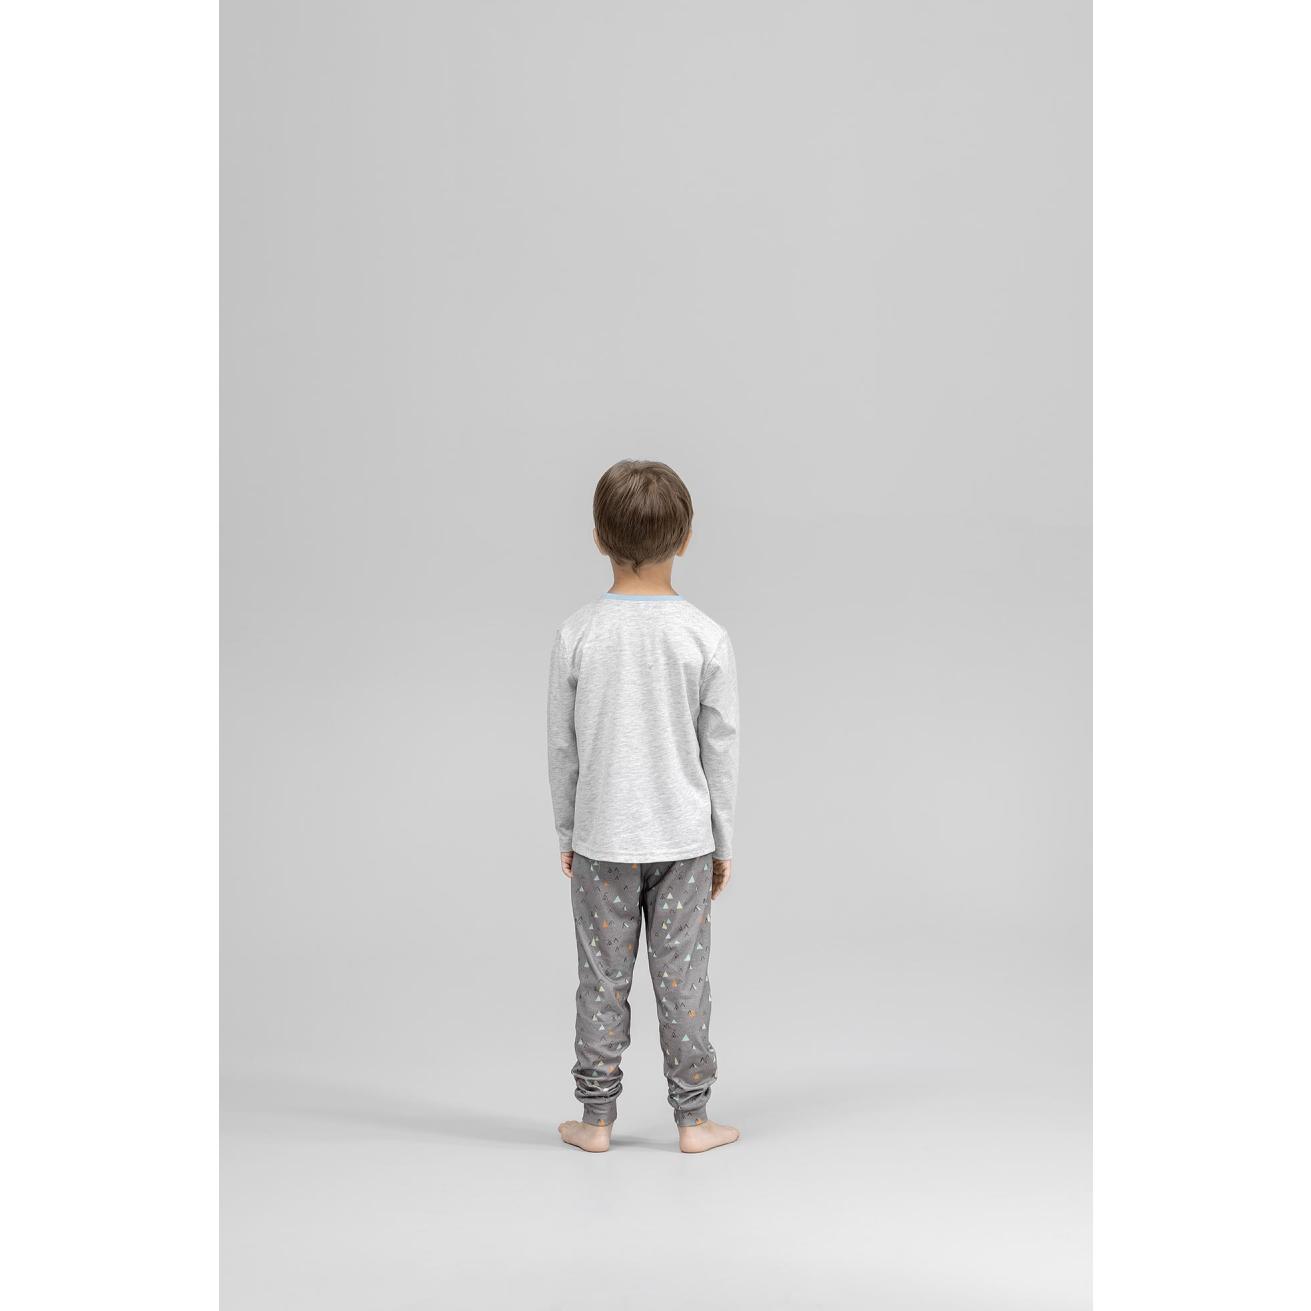 Пижама для мальчиков Kids by togas Касслер серый 128-134 см, размер 128-134 см - фото 5